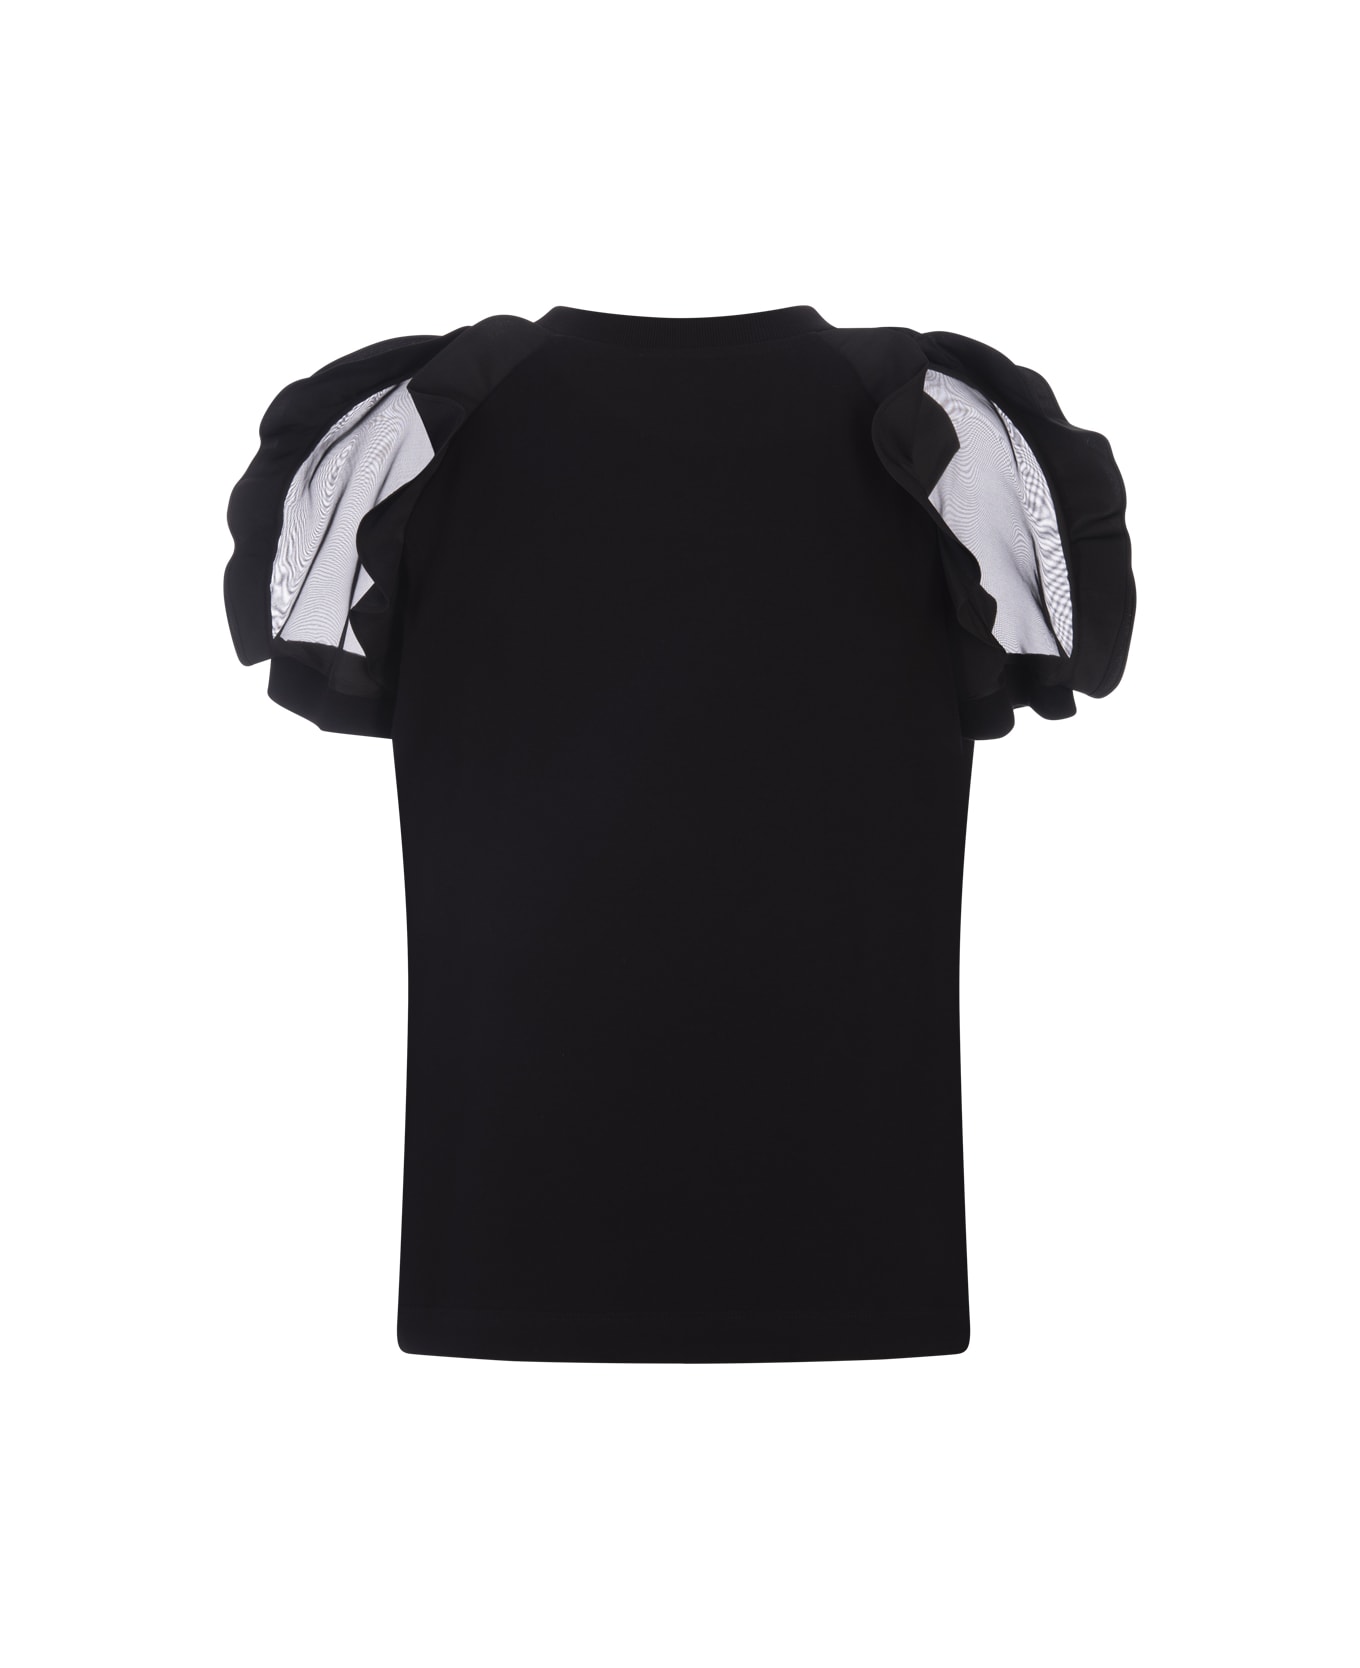 Alexander McQueen Black T-shirt With Ruffles Detail - Black Tシャツ